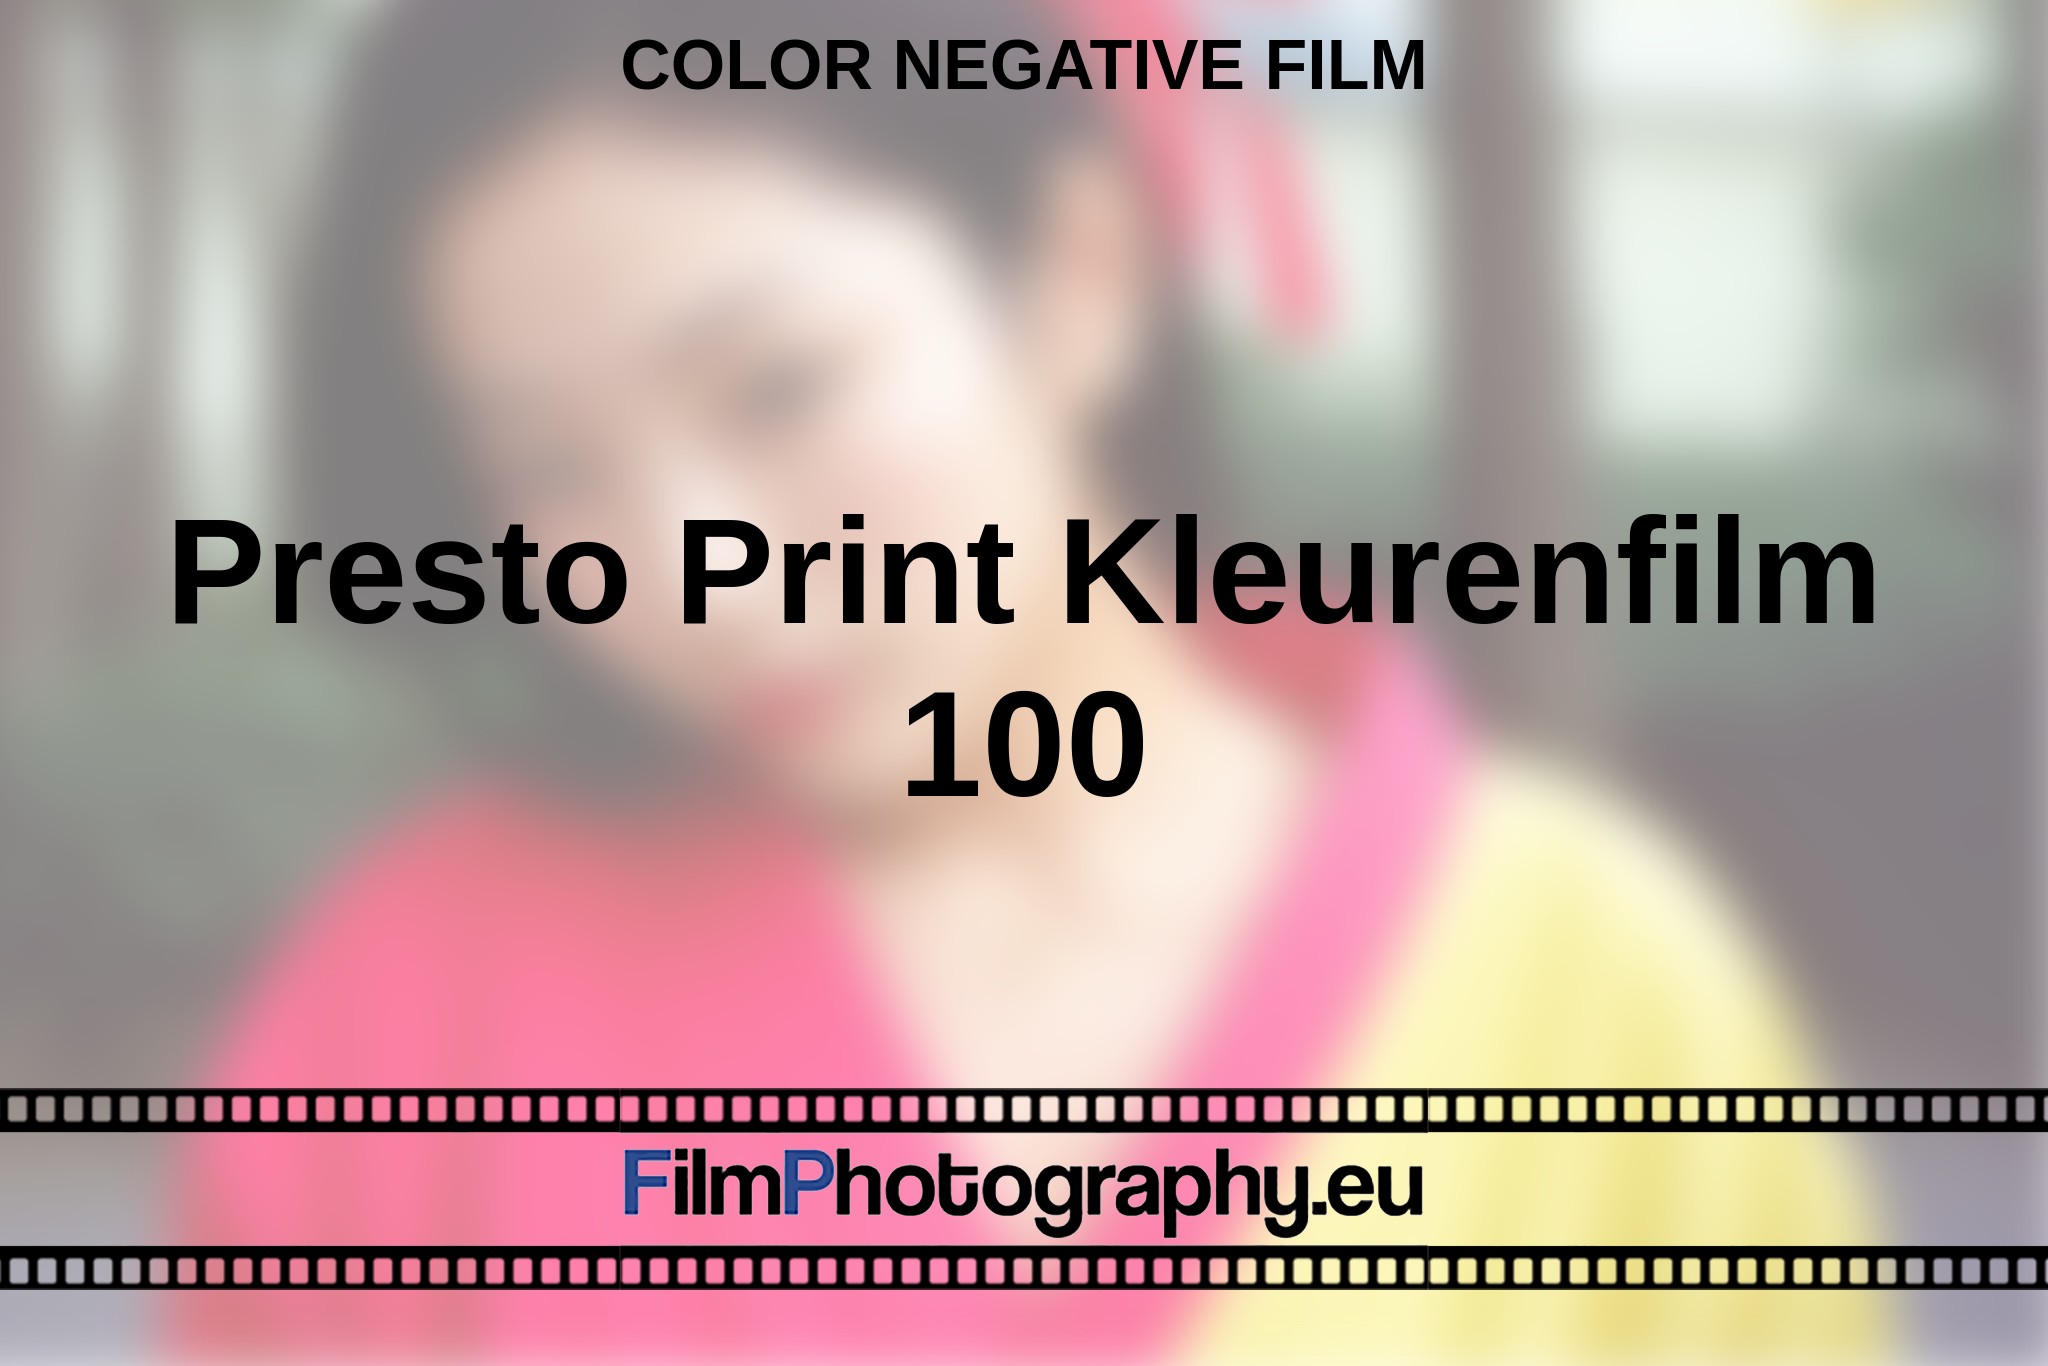 presto-print-kleurenfilm-100-color-negative-film-en-bnv.jpg